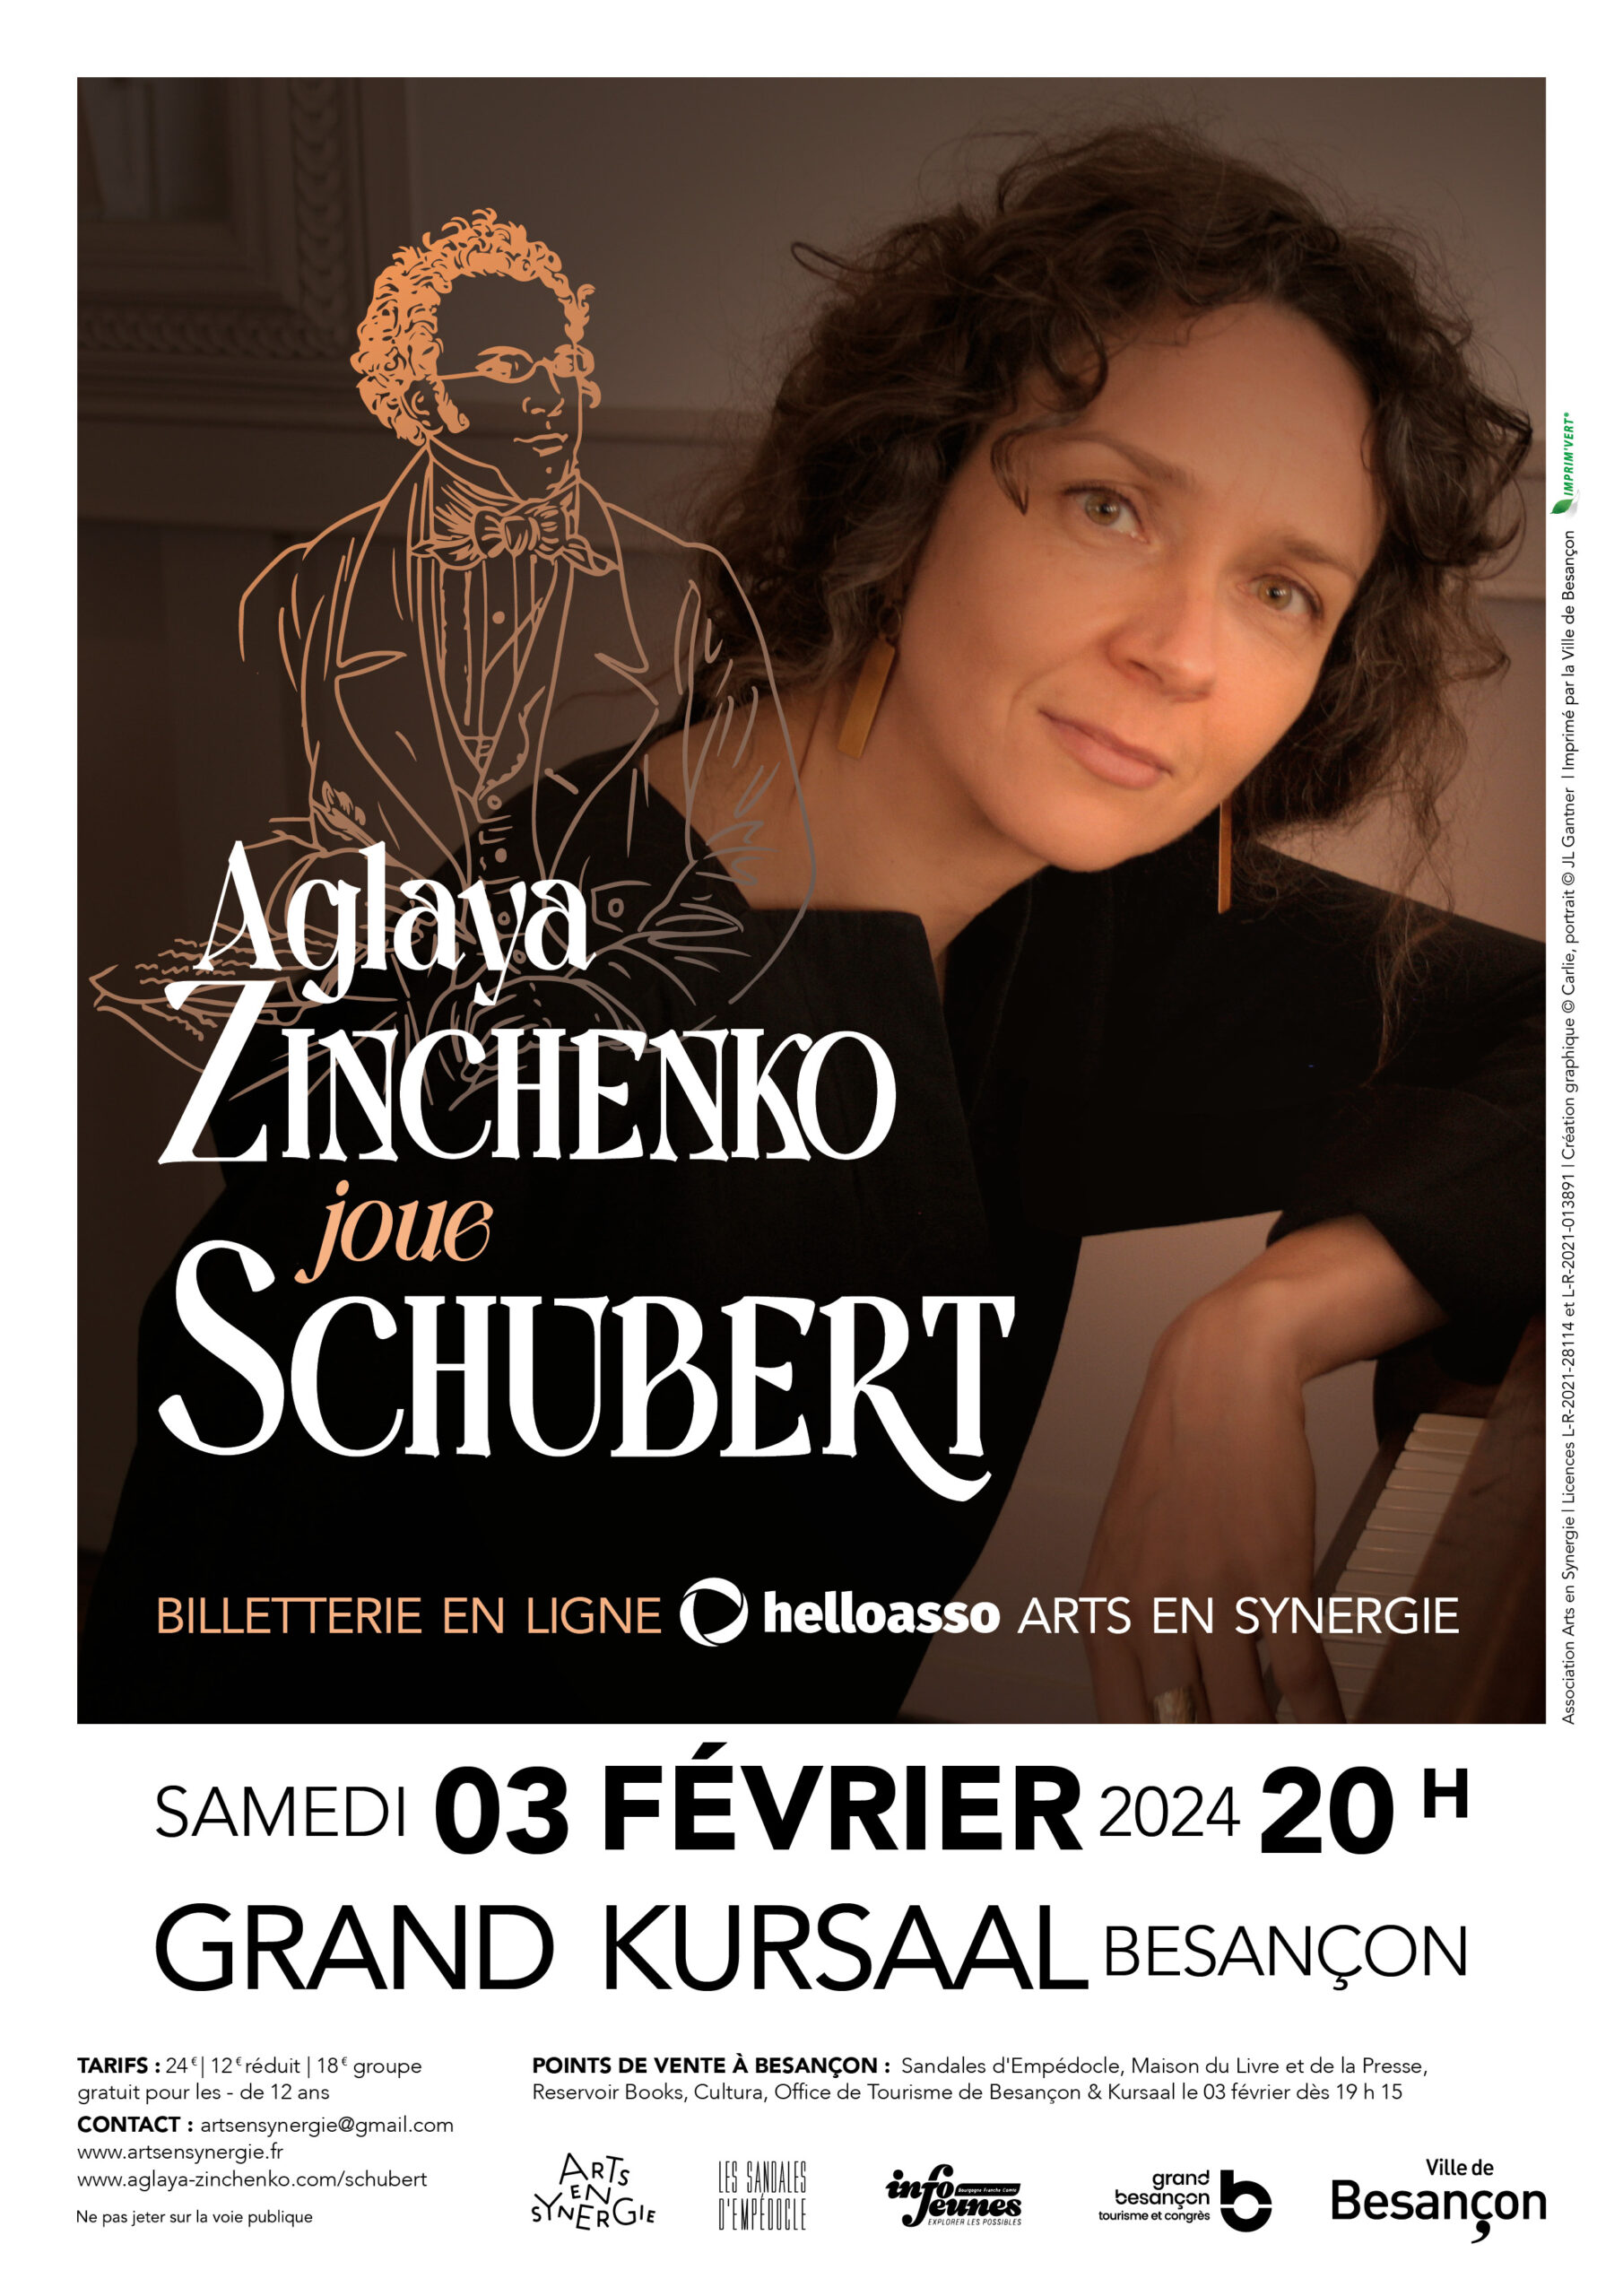 Aglaya Zinchenko joue Schubert au Kursaal le 3 février 2024